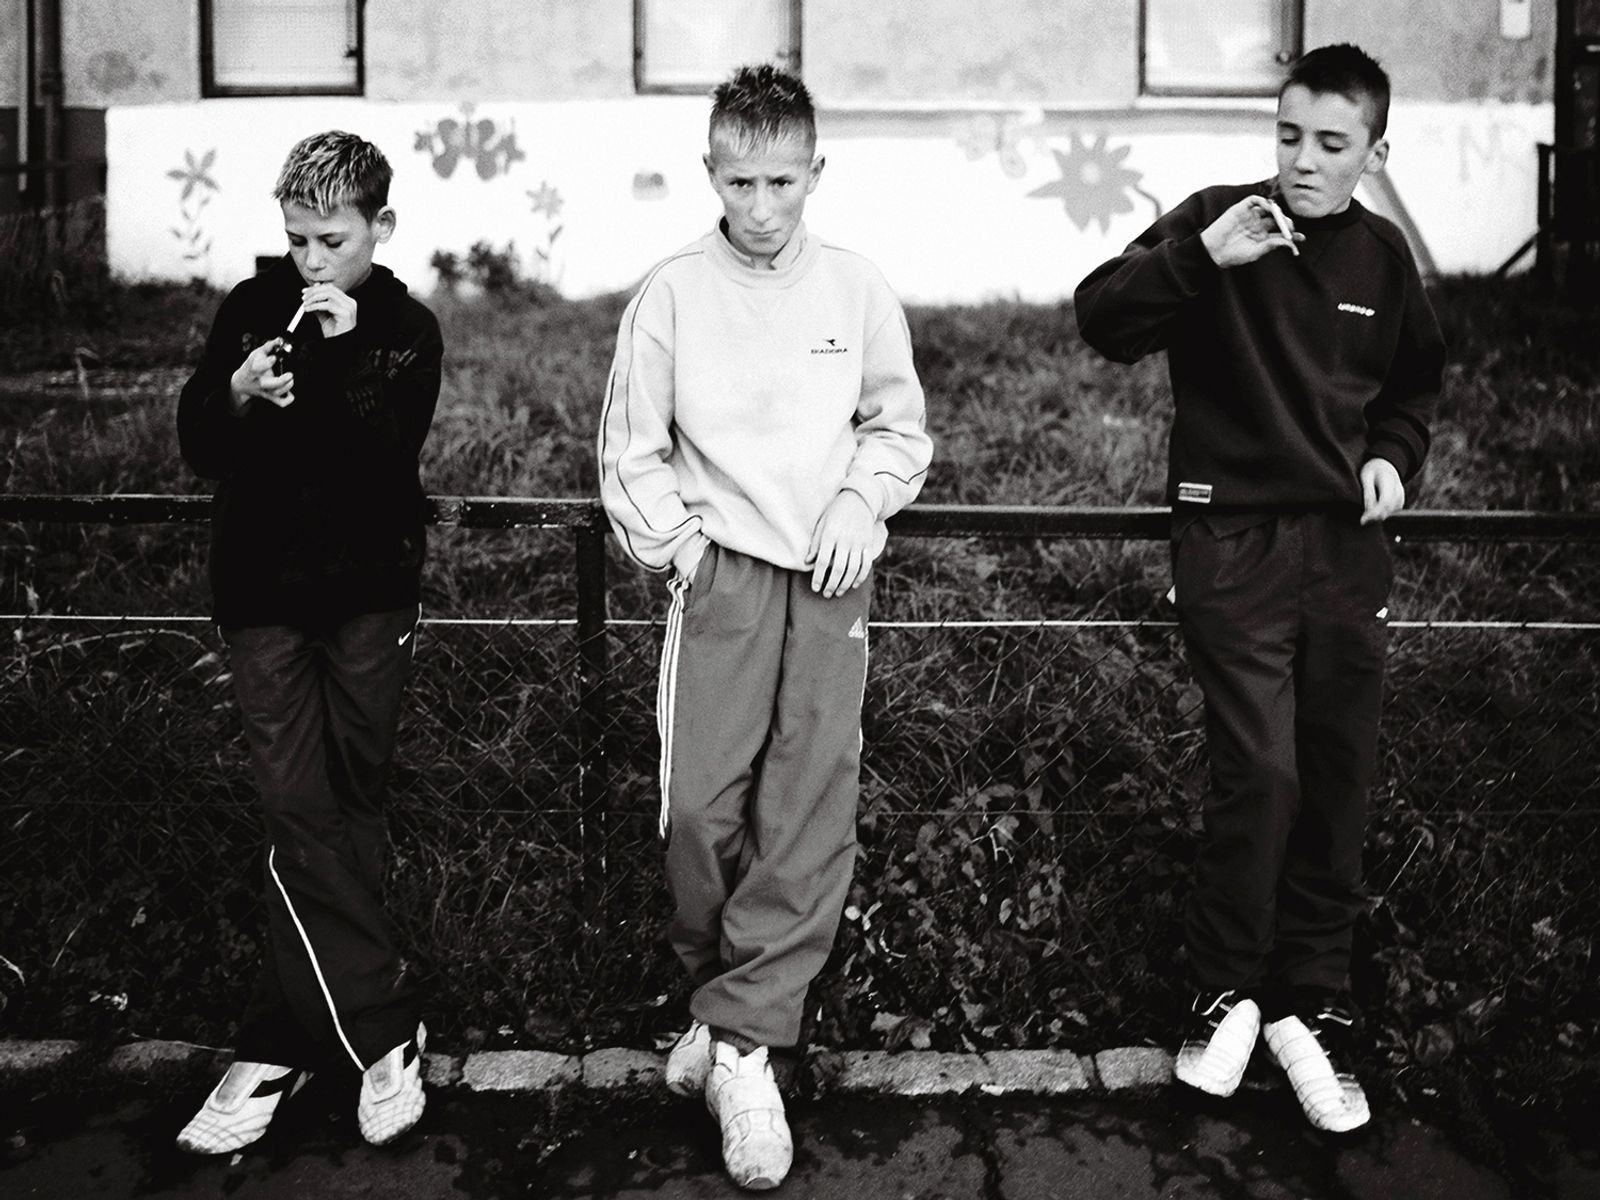 © Toby Binder - Edinburgh, Niddrie. Young boys smoking cigarettes.